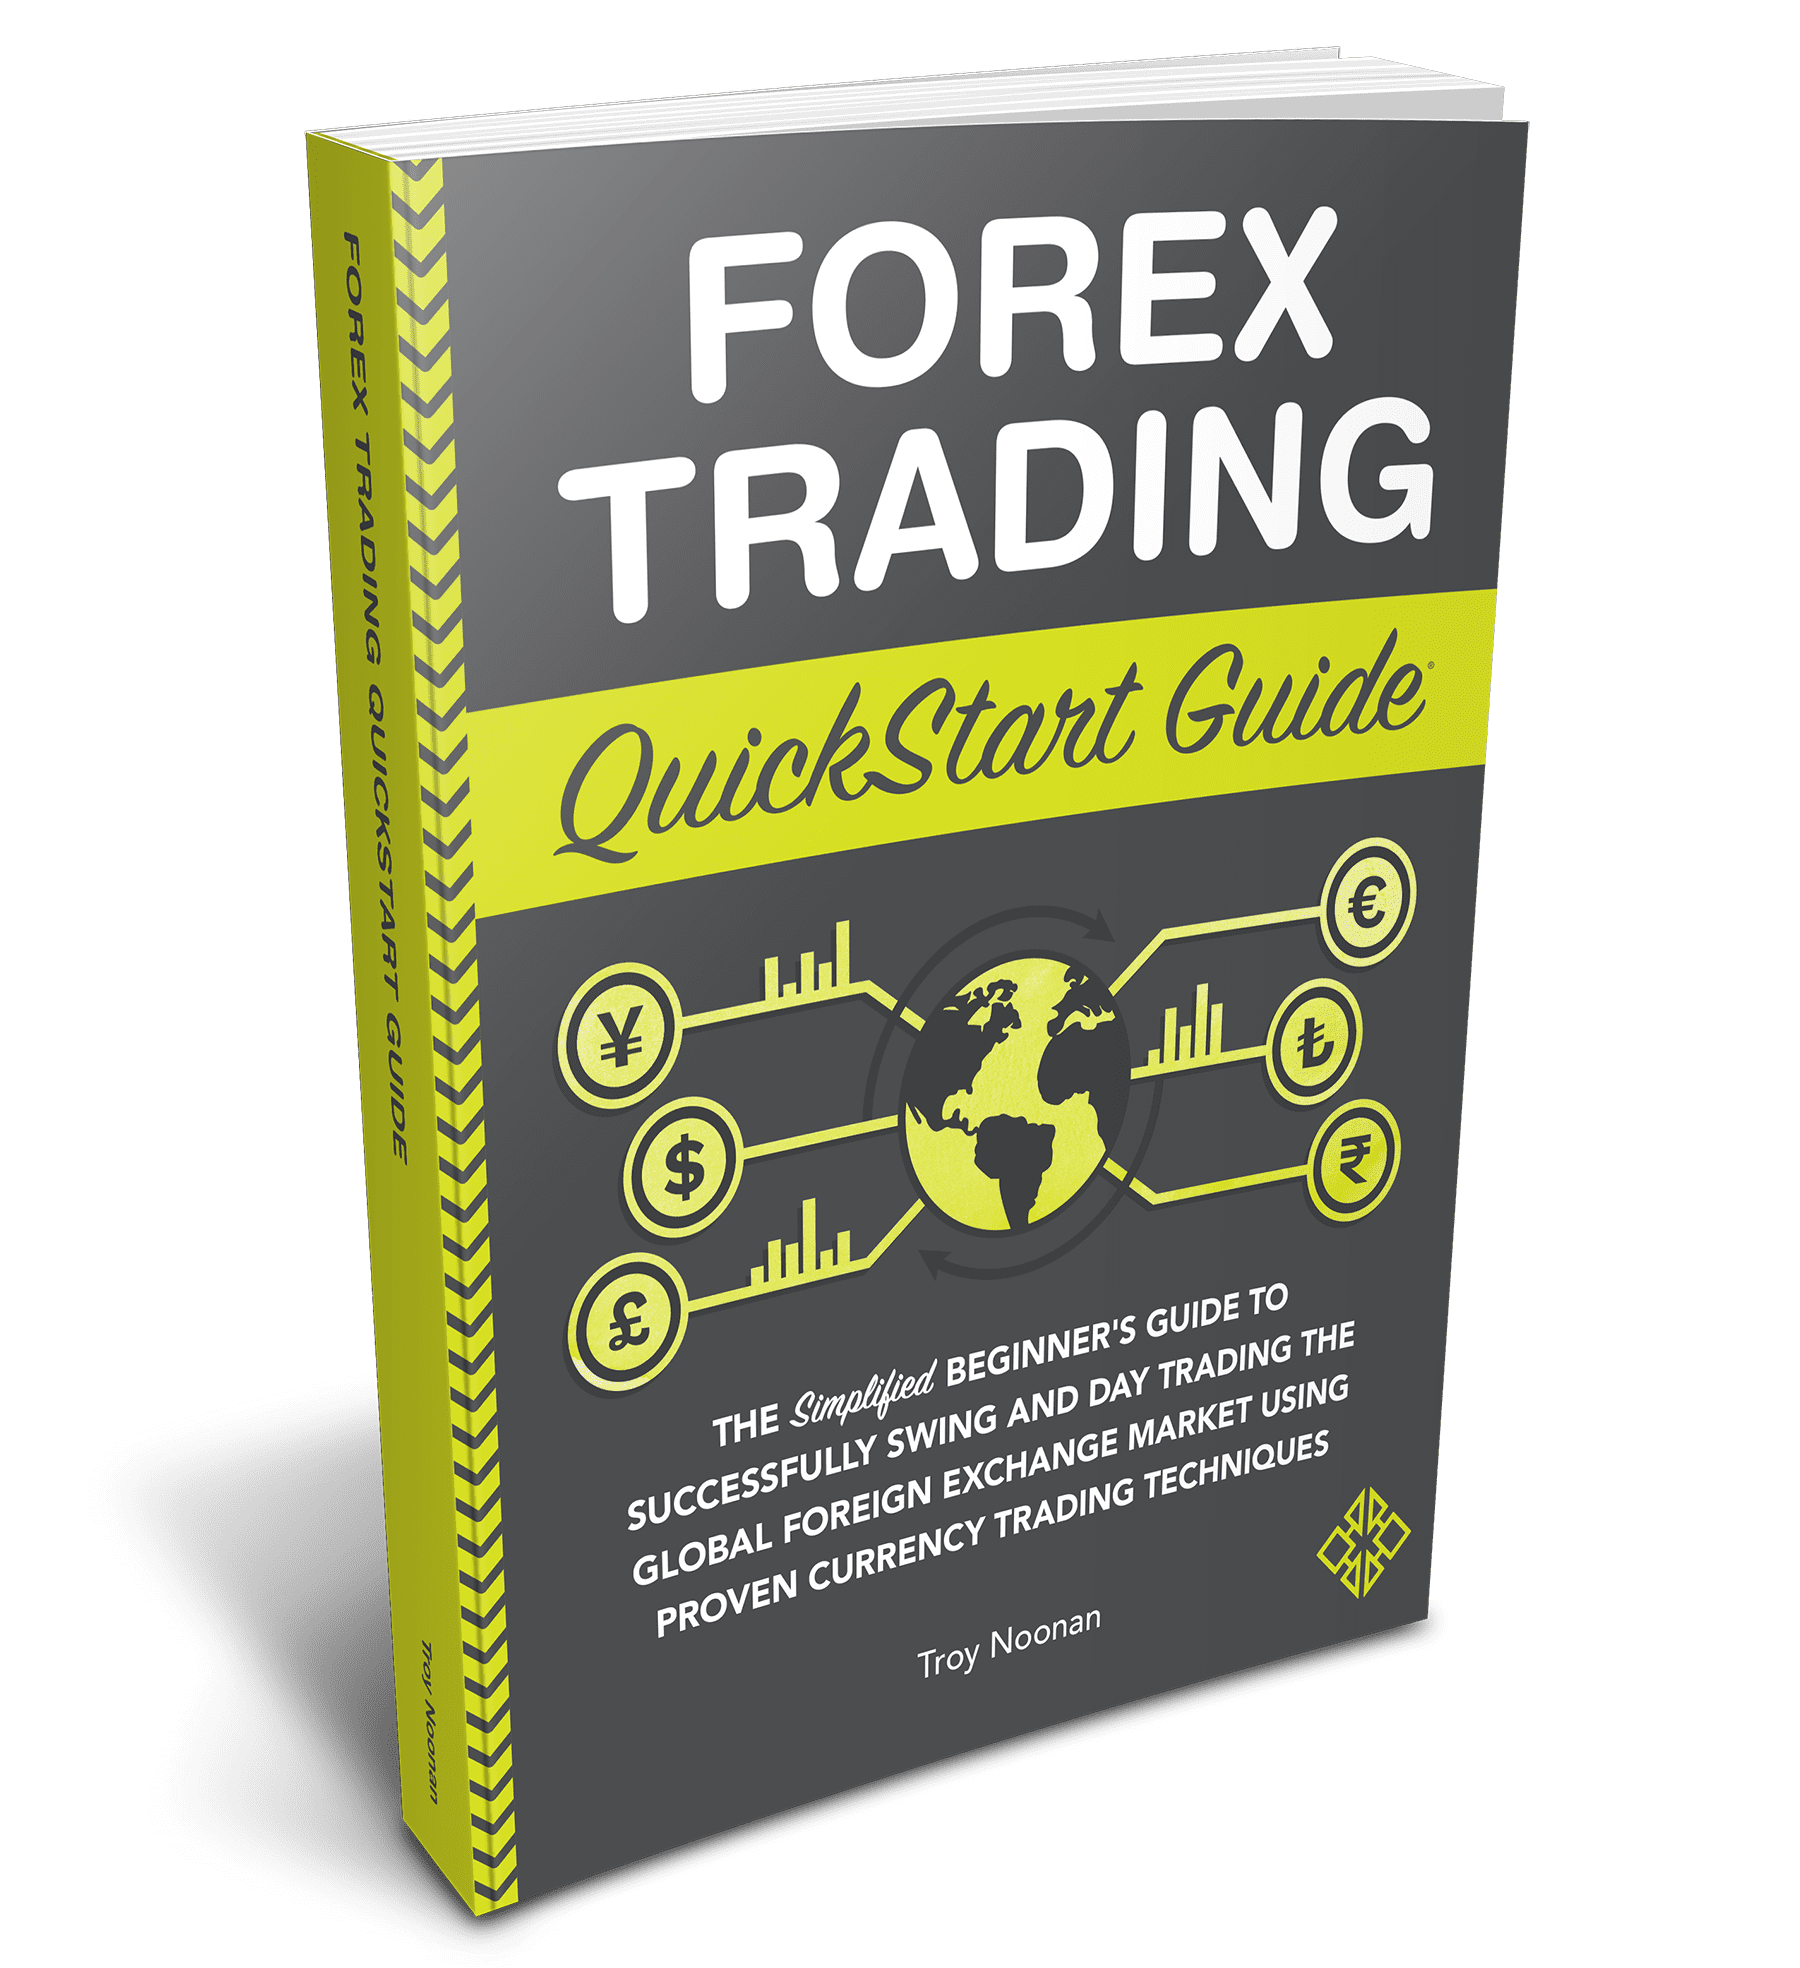 Forex Trading QuickStart Guide by veteran trader Troy Noonan